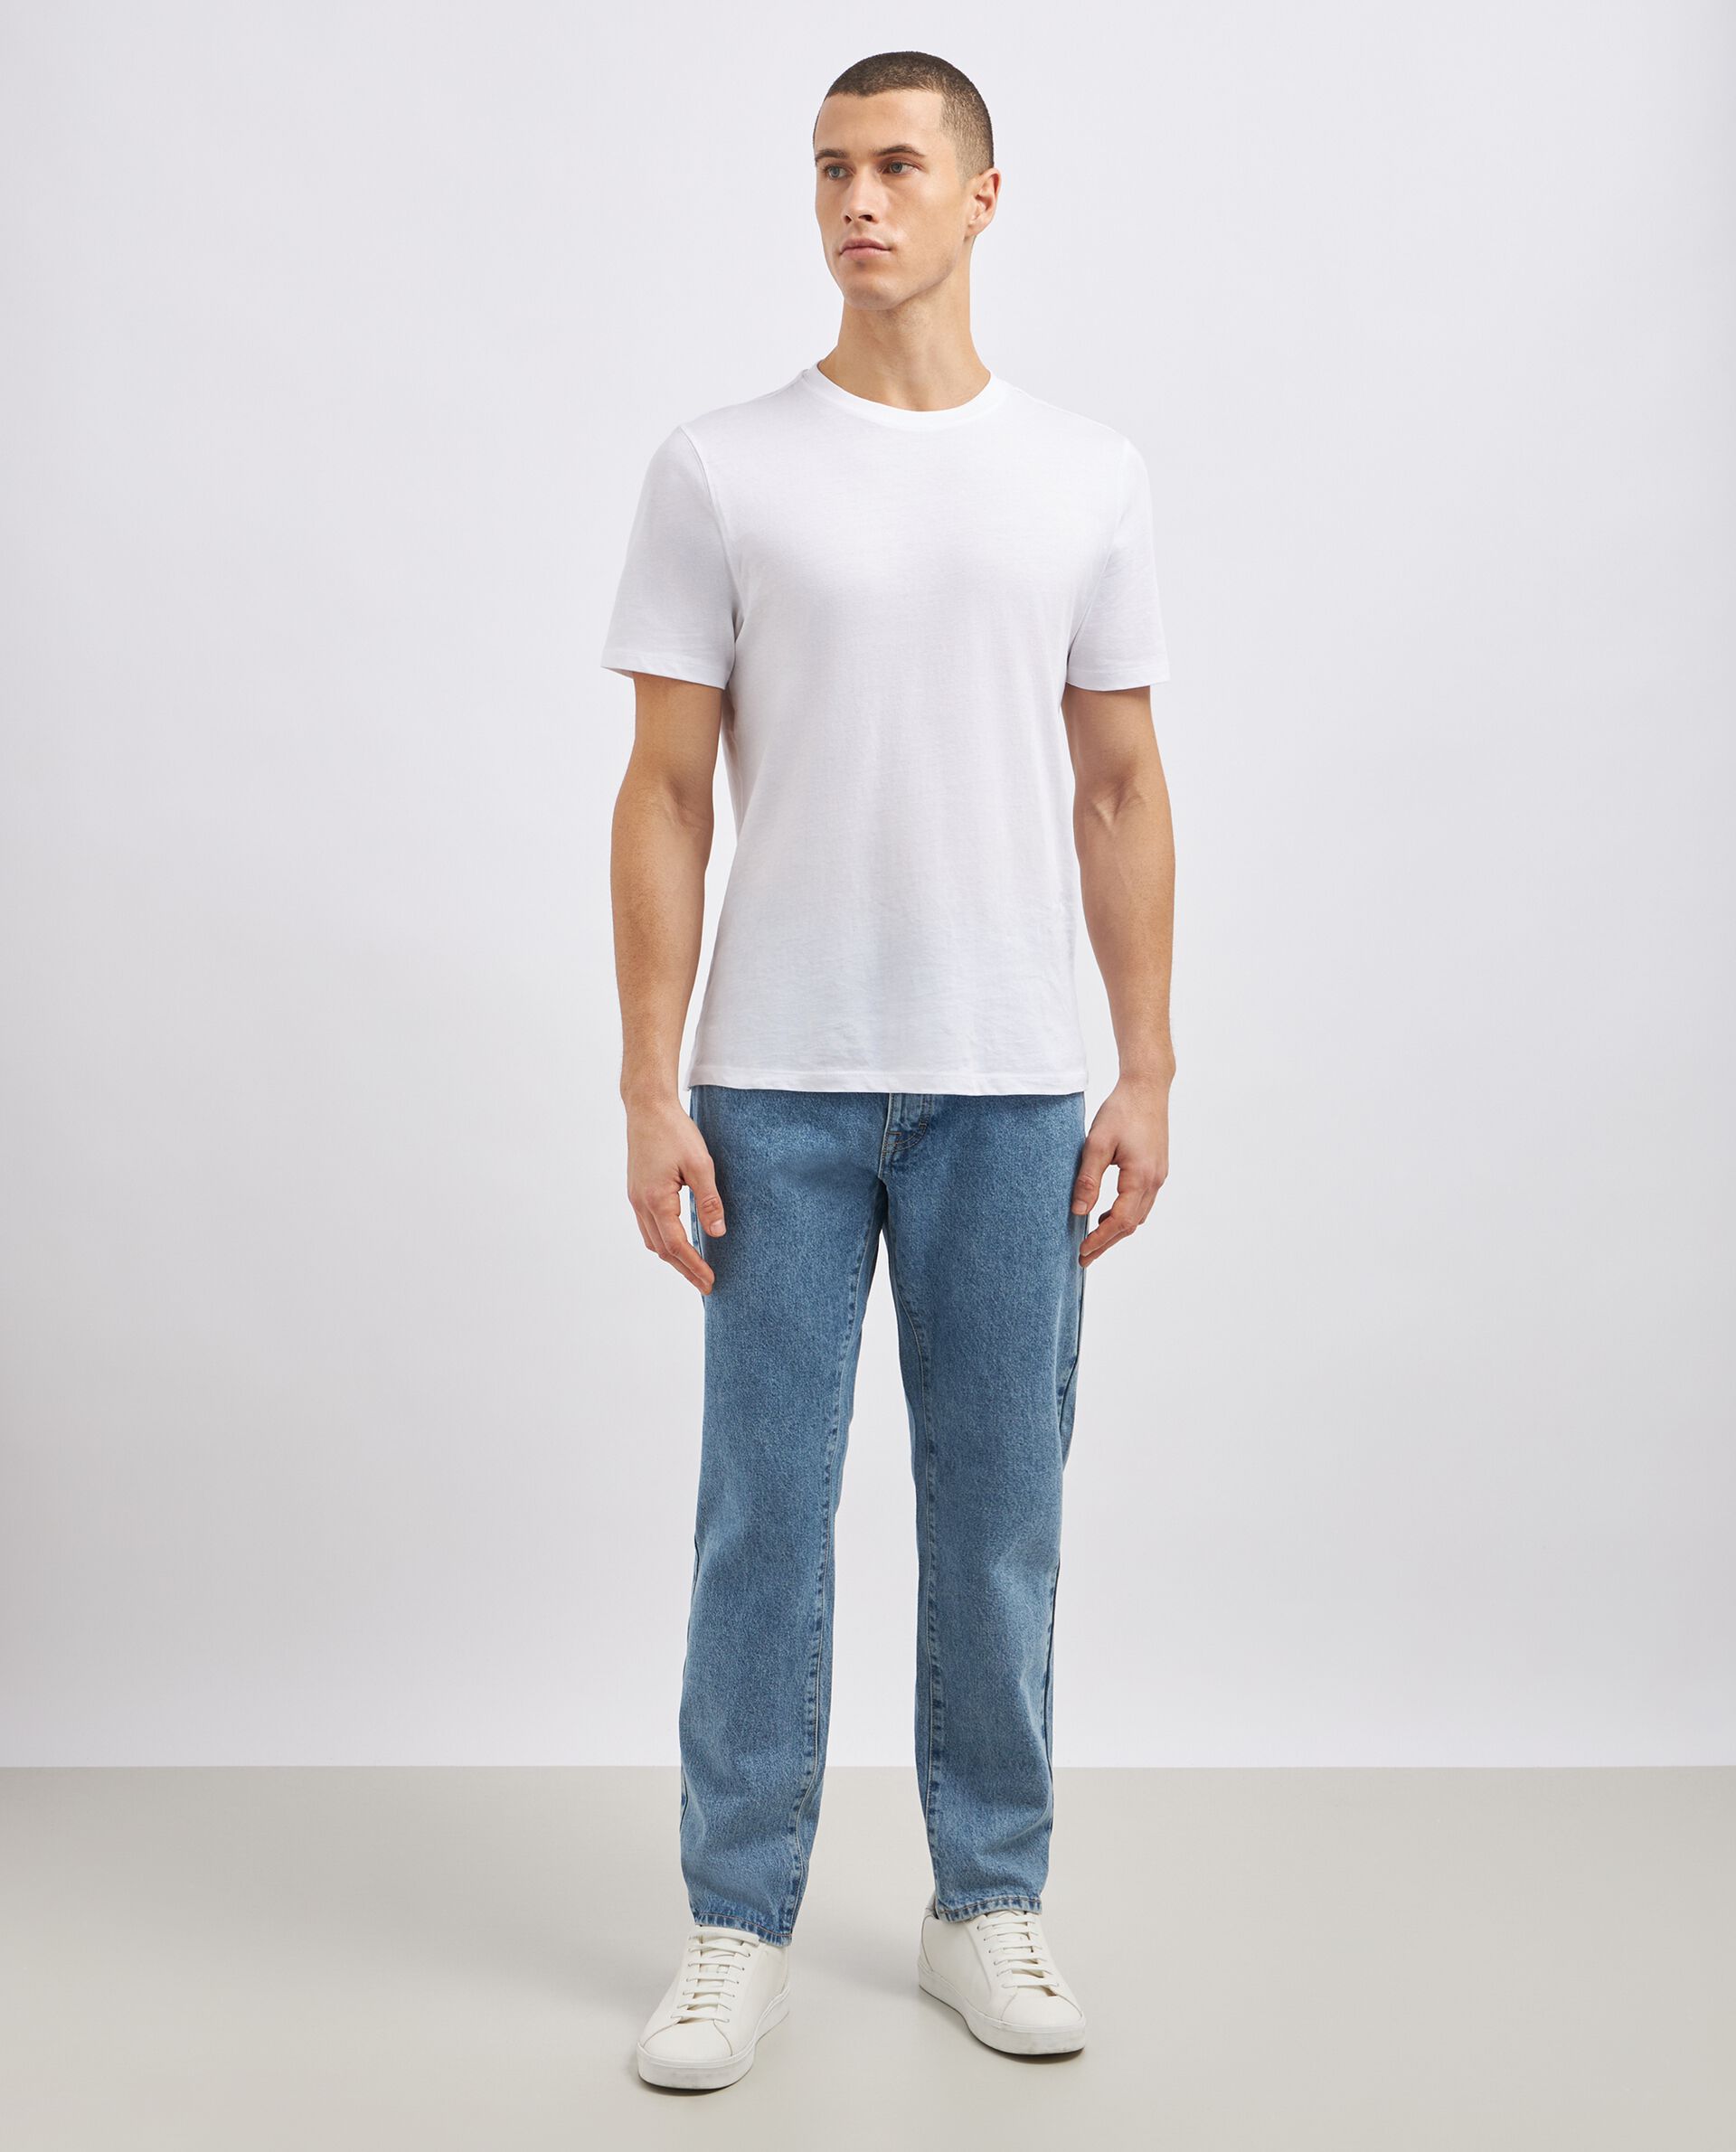 Jeans regular fit in puro cotone uomo